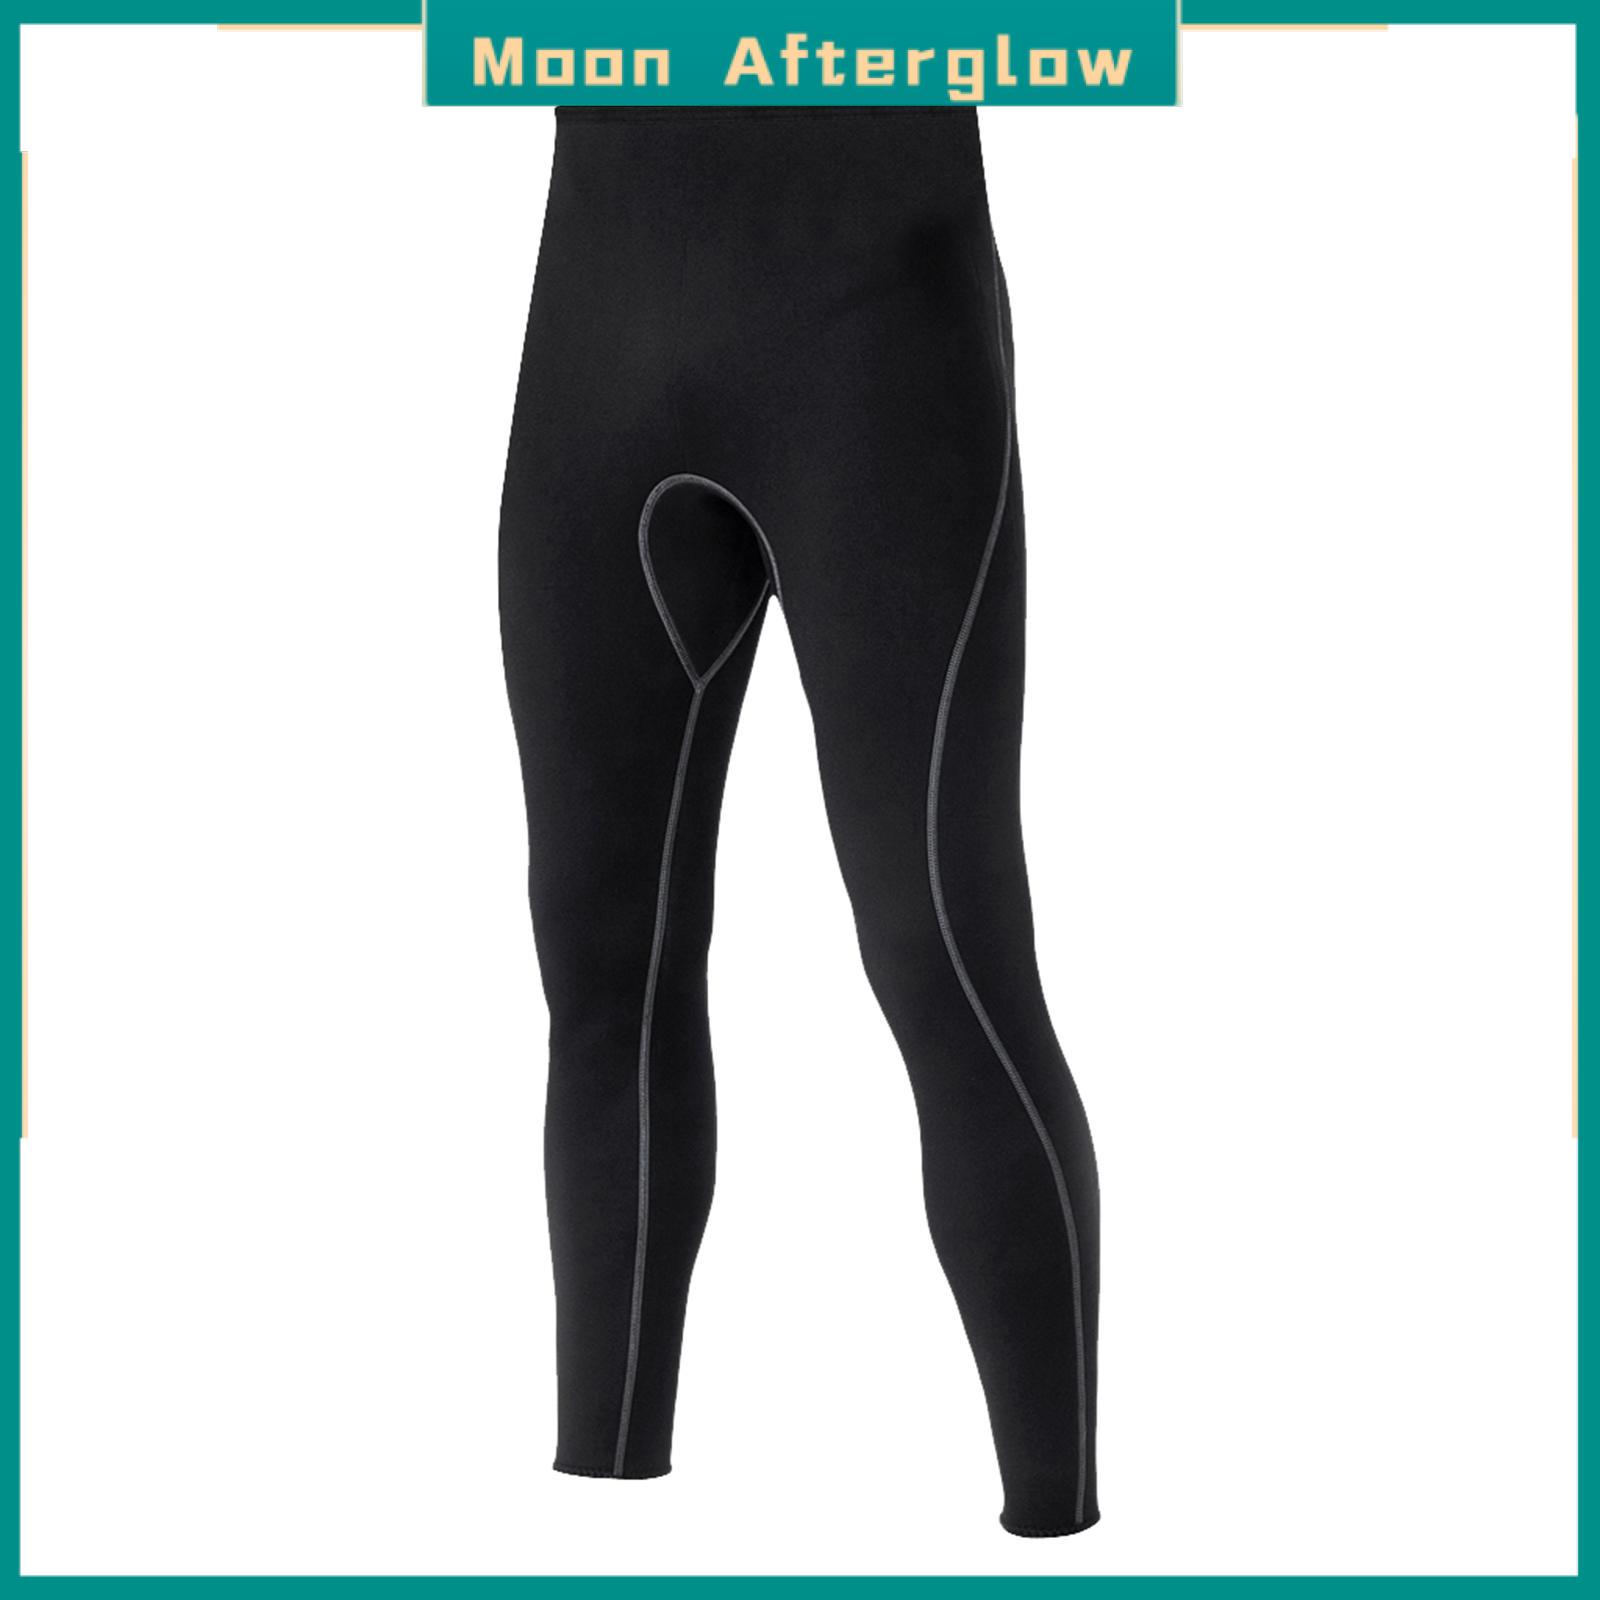 Moon Afterglow Mens Neoprene Wetsuit Long Pants Keep Warm for Water Sports